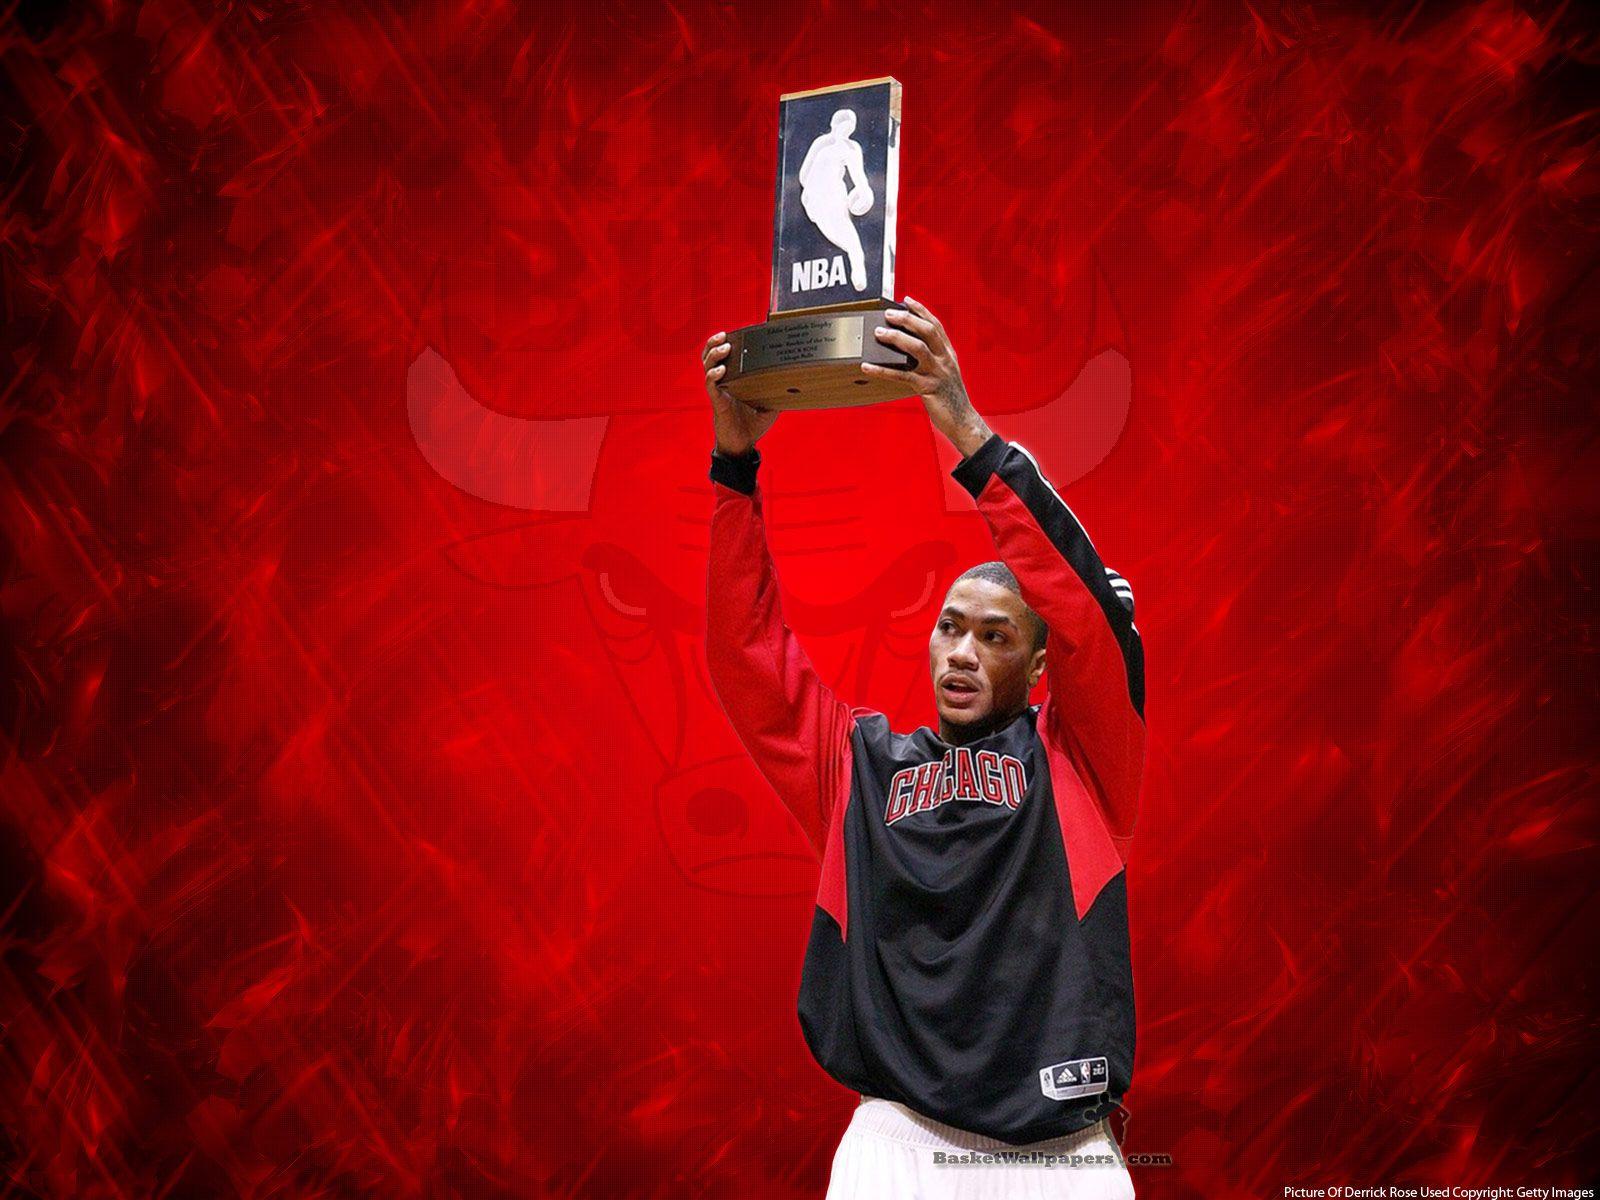 Derrick Rose 2009 Rookie Award Wallpaper. Basketball Wallpaper at